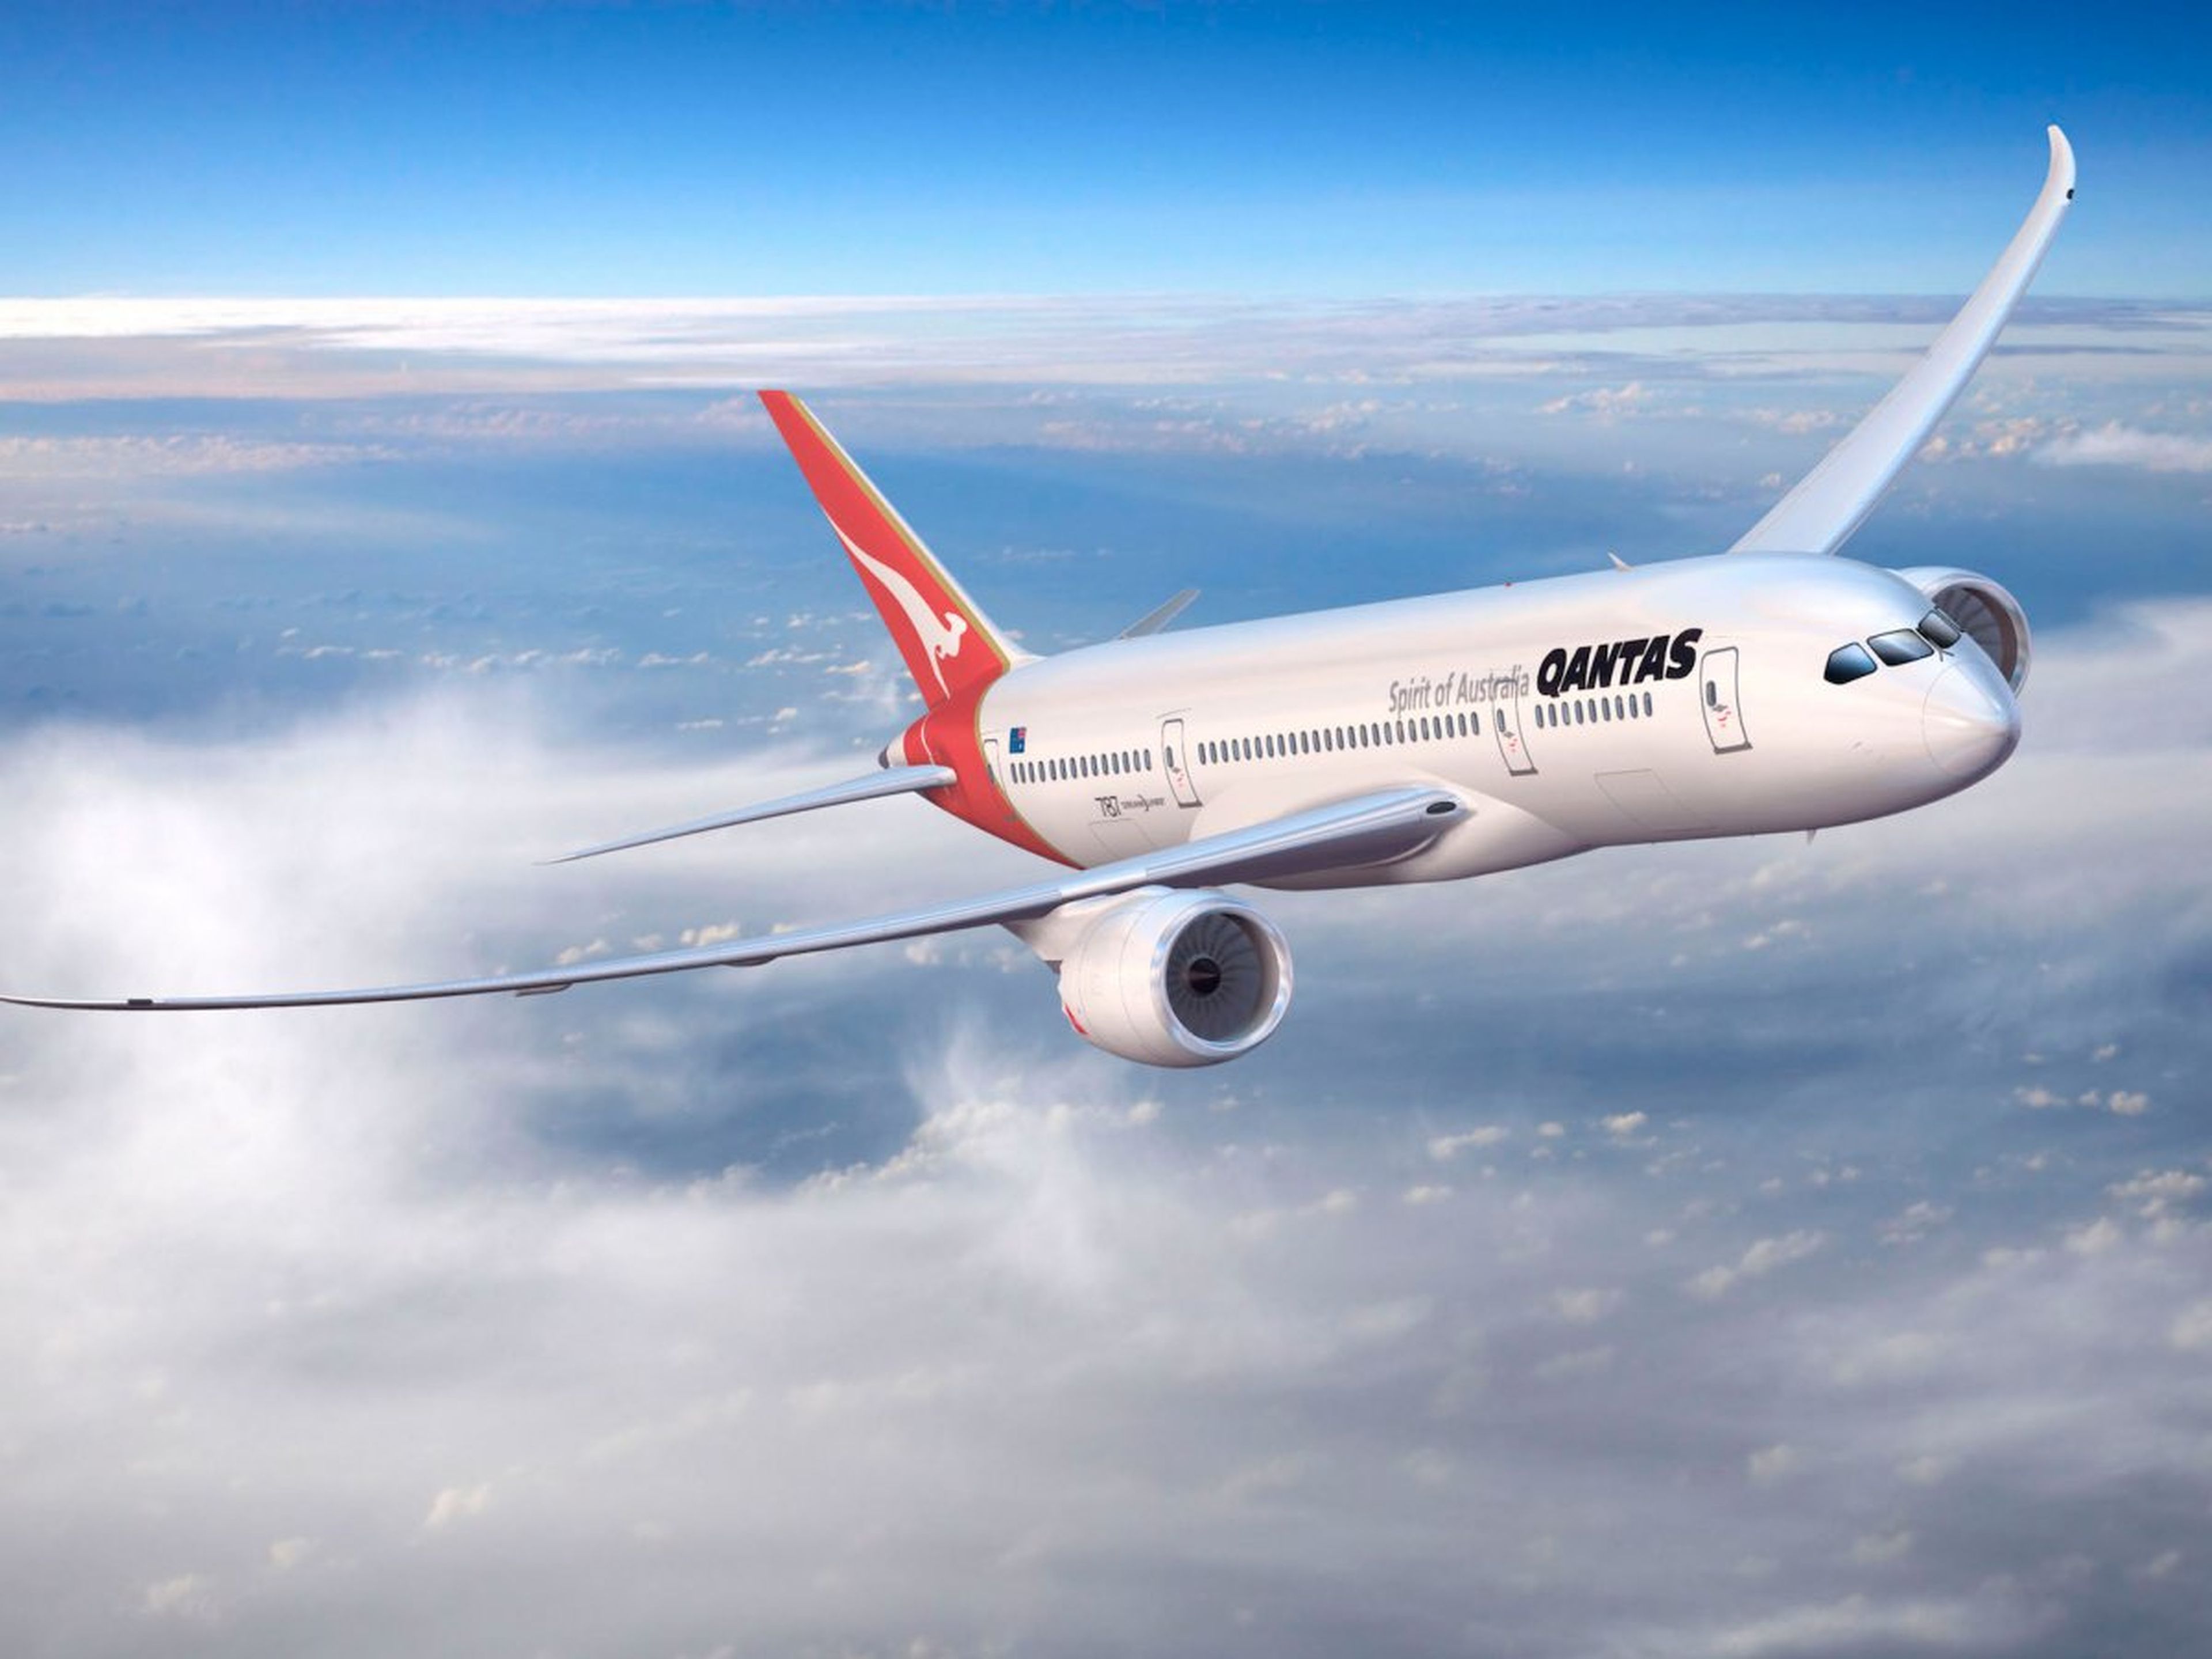 Avion vuelo de Qantas